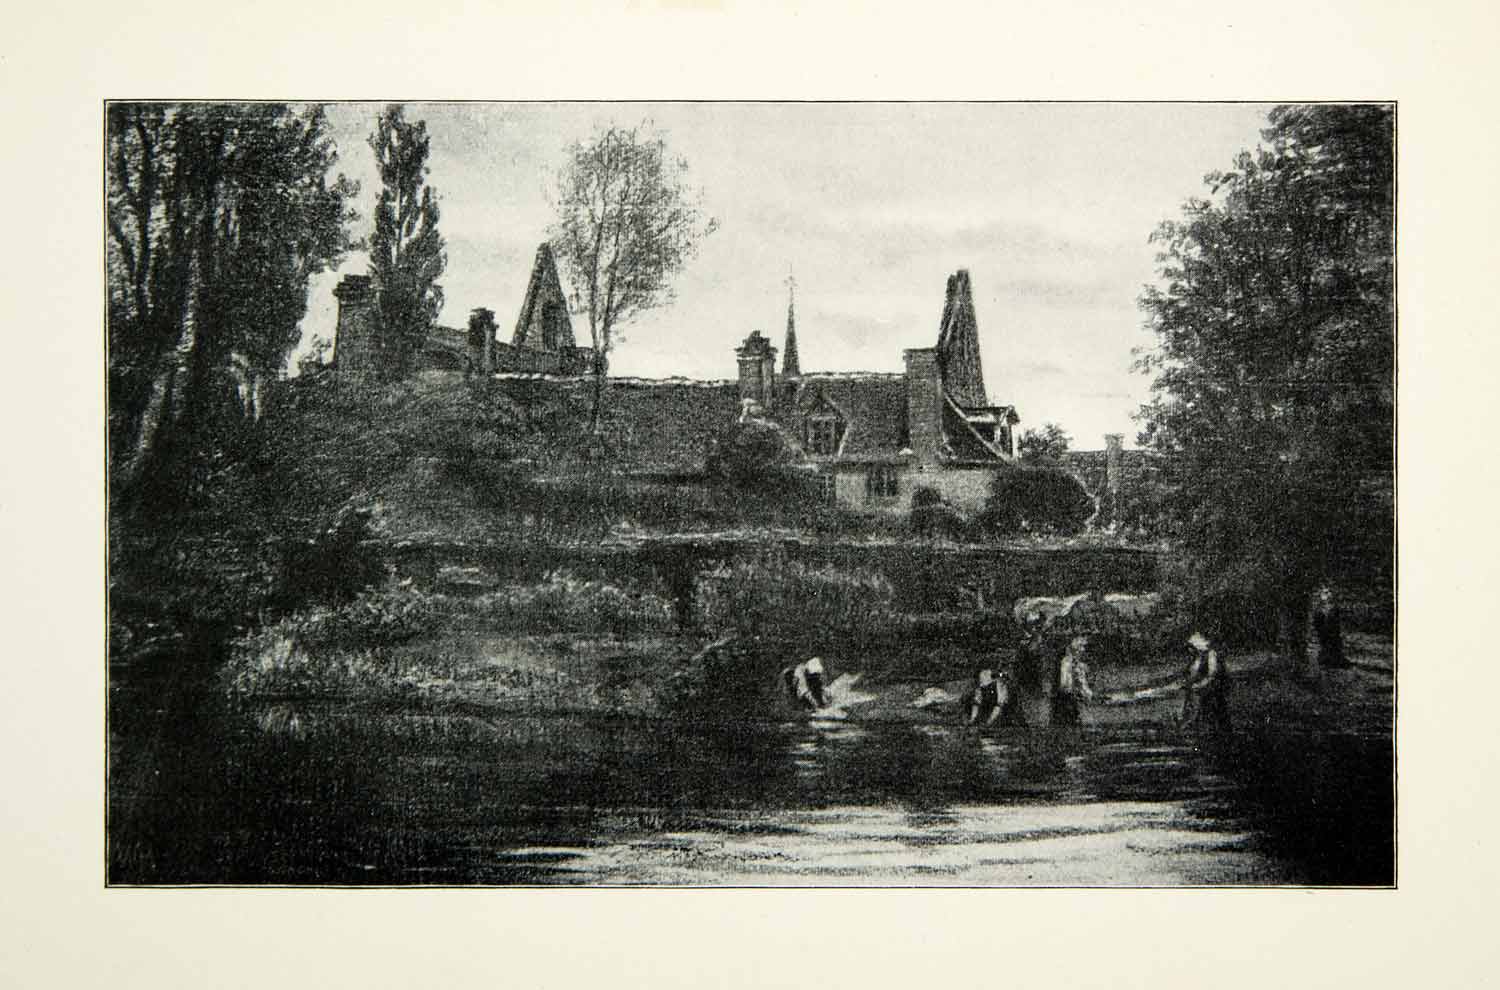 1900 Print Washing River William Morris Hunt Village Scene Quaint Rural XAIA8